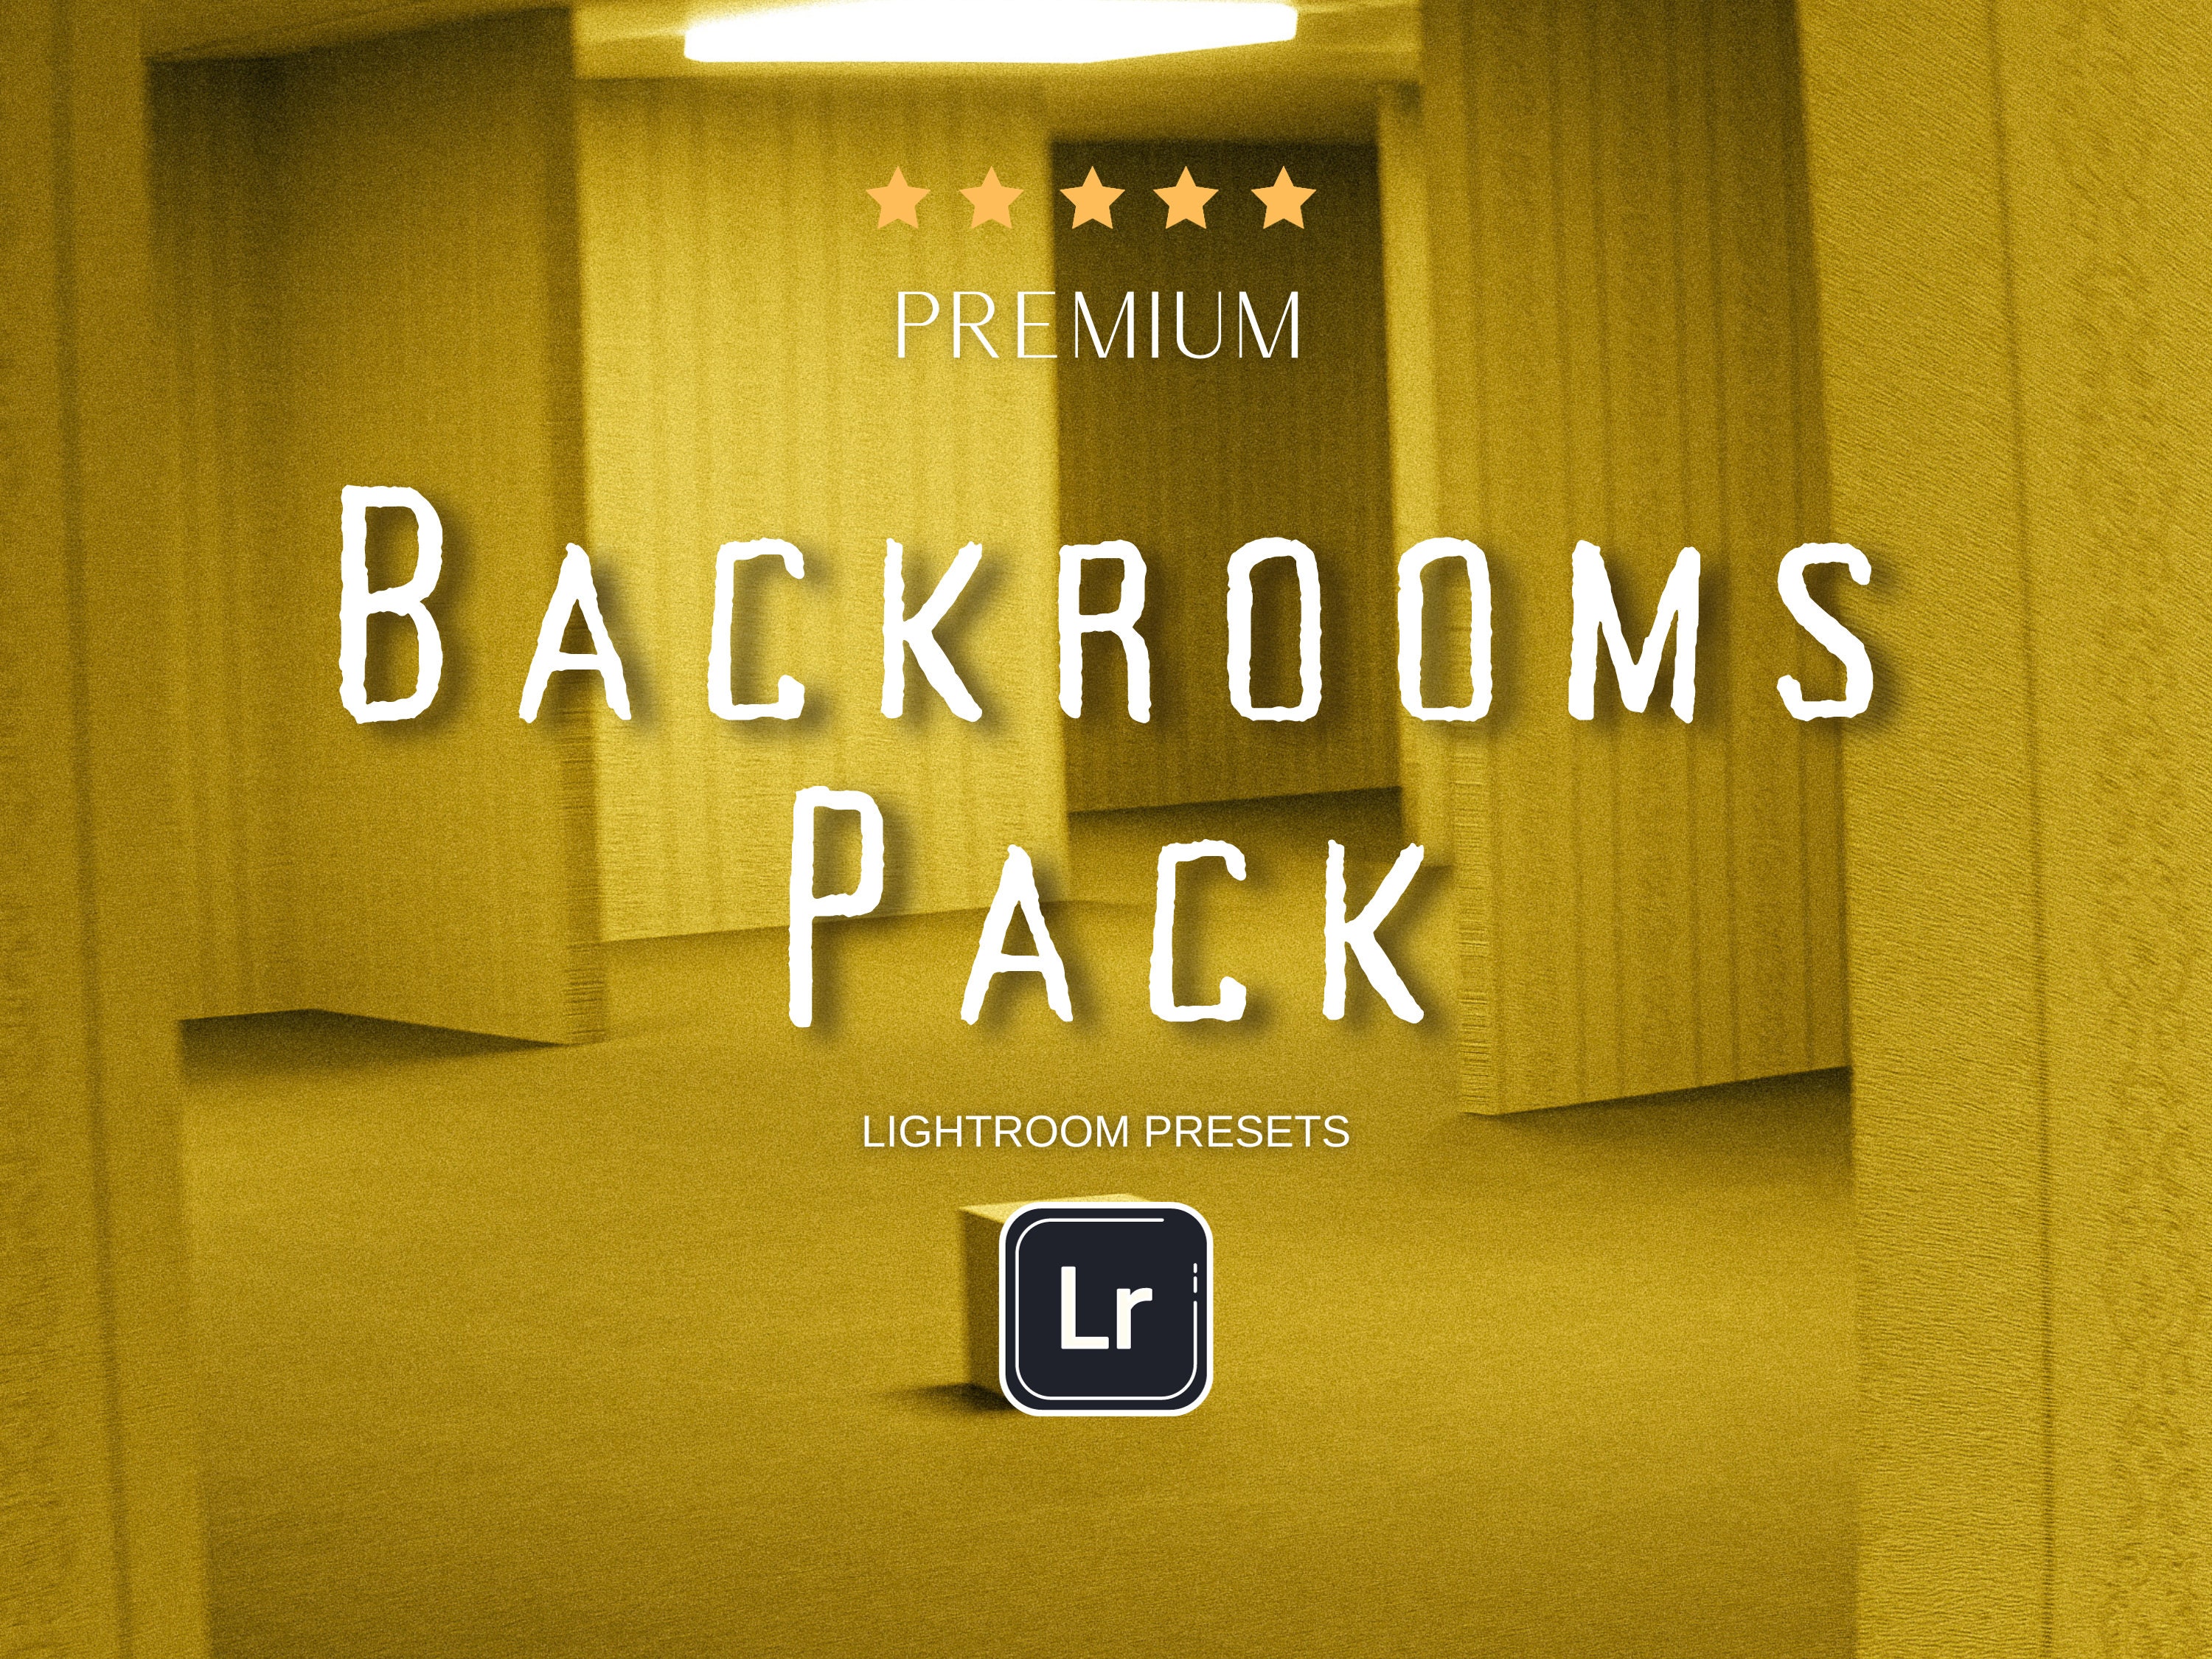 level 2 backrooms  Black rooms, Weird dreams, Room inspo